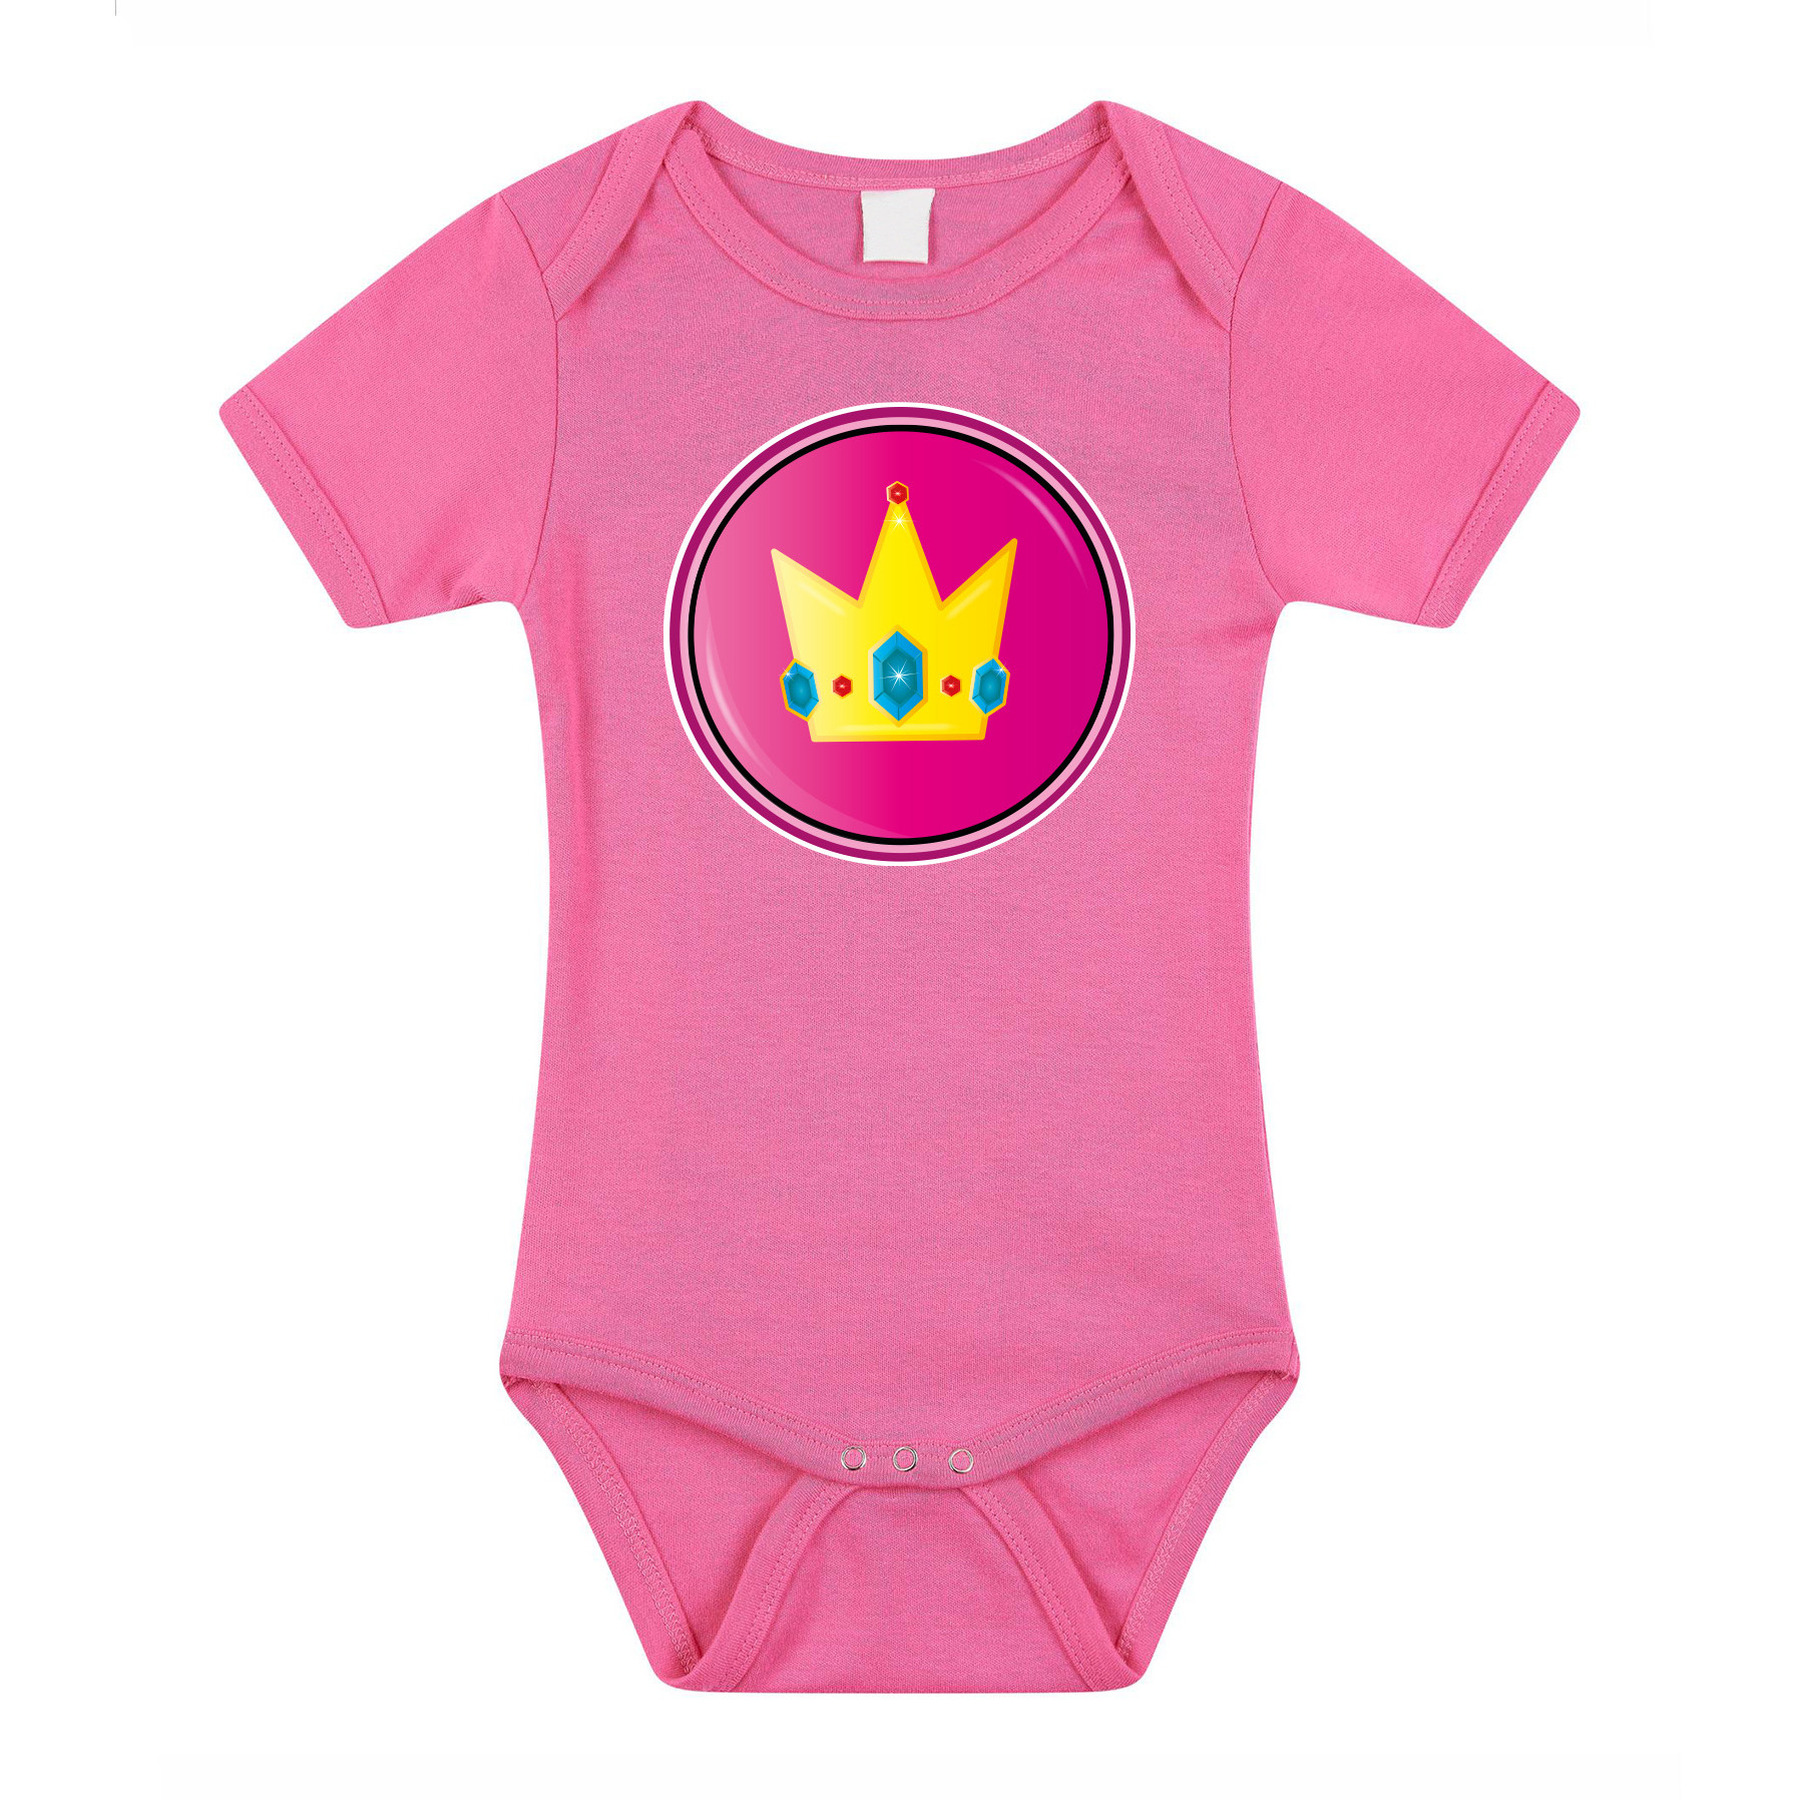 Baby rompertje prinses Peach roze kraam cadeau babyshower verkleed-cadeau romper